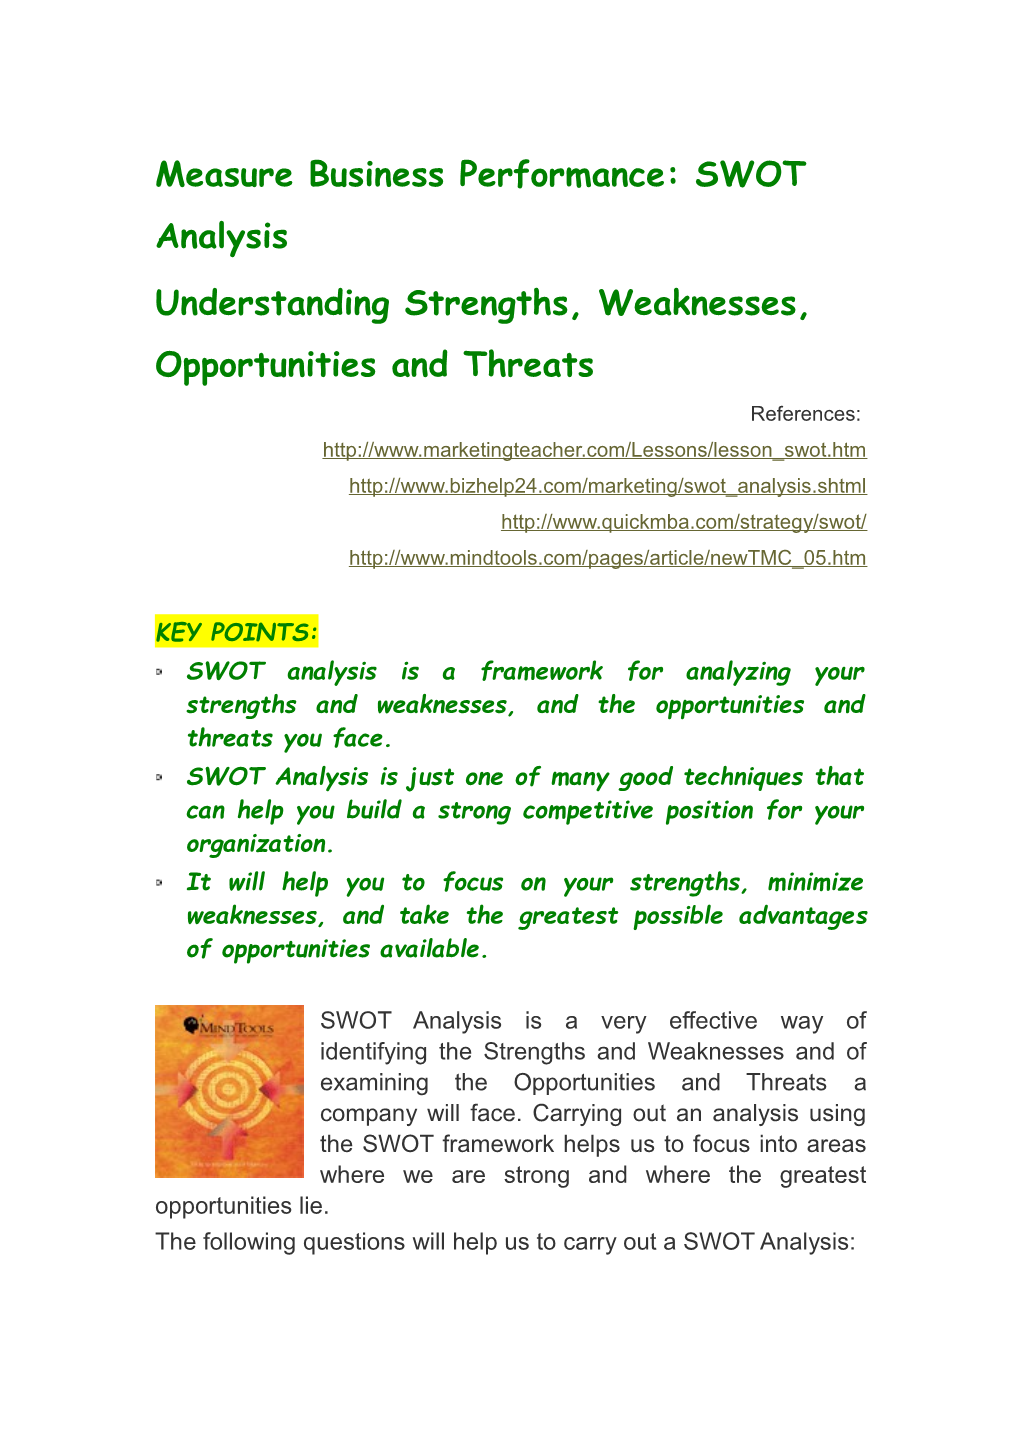 Measure Business Performance: SWOT Analysis